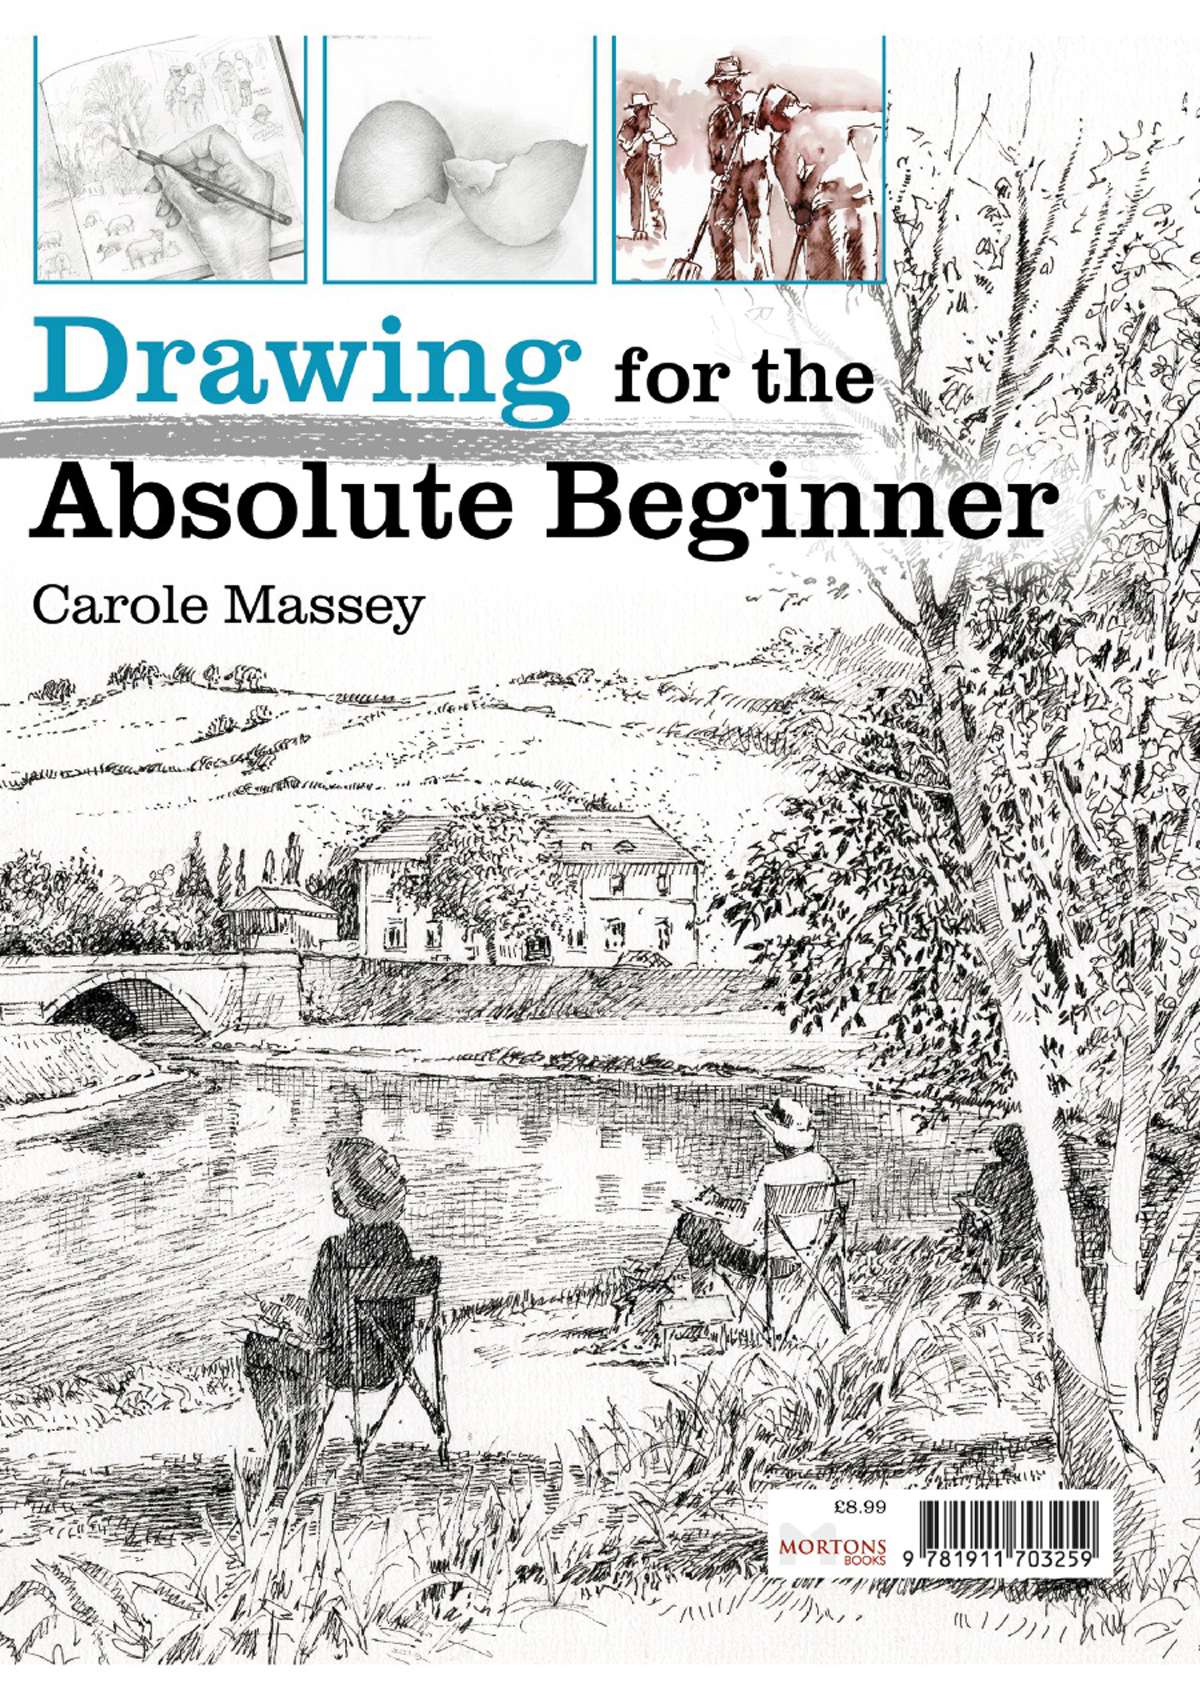 30-Minute Drawing for Beginners by Jordan Dewilde - 9781647391225 - Dymocks-saigonsouth.com.vn